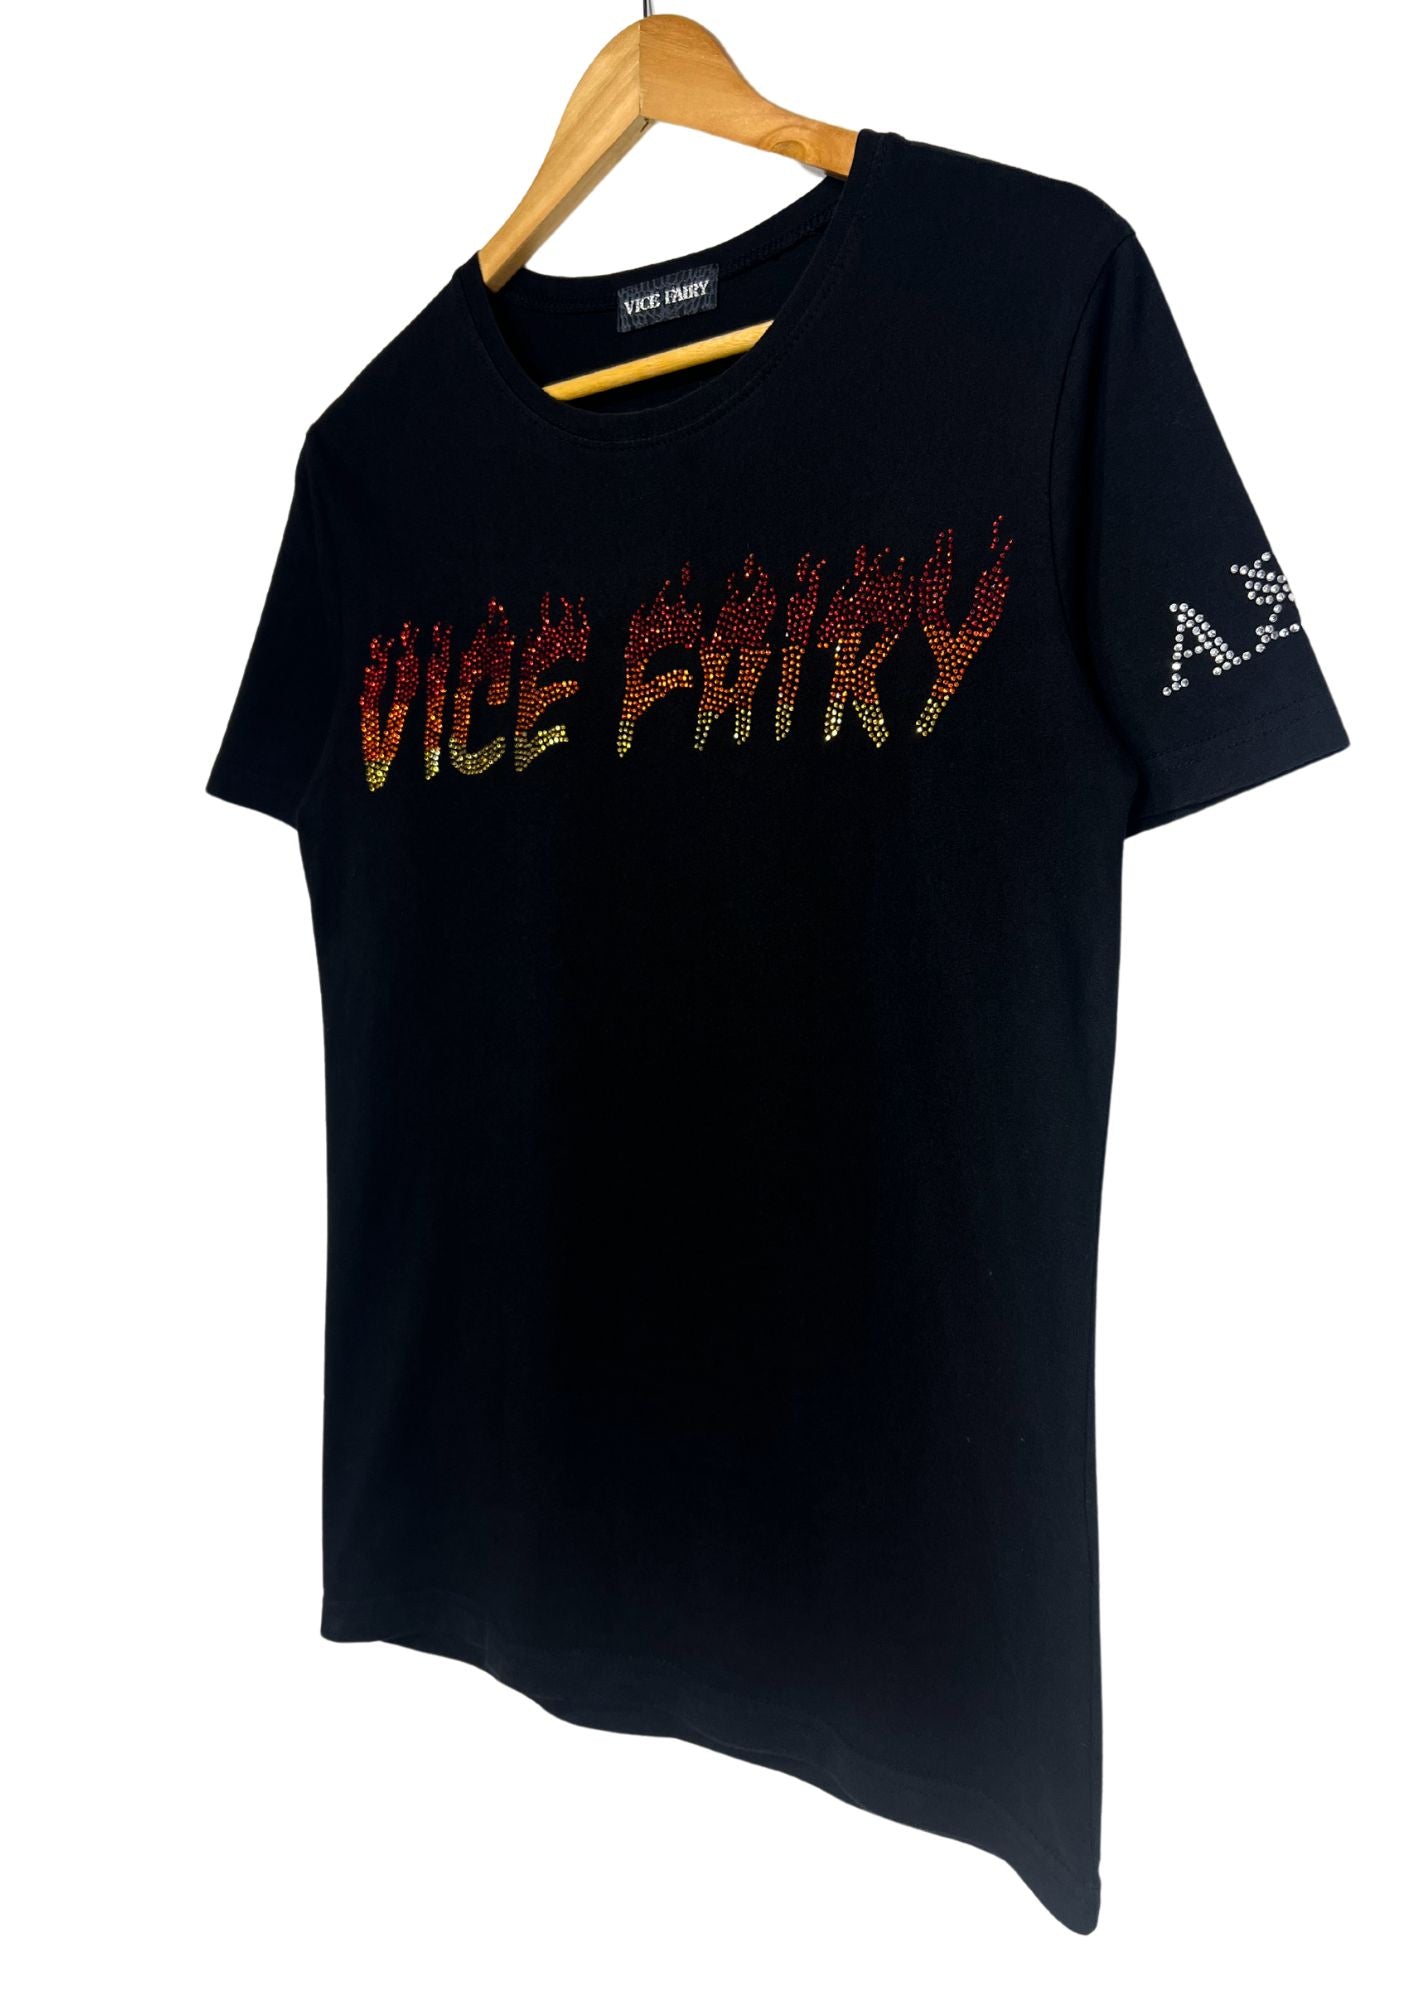 2010 One Piece x VICE FAIRY Rhinestones Ace T-shirt